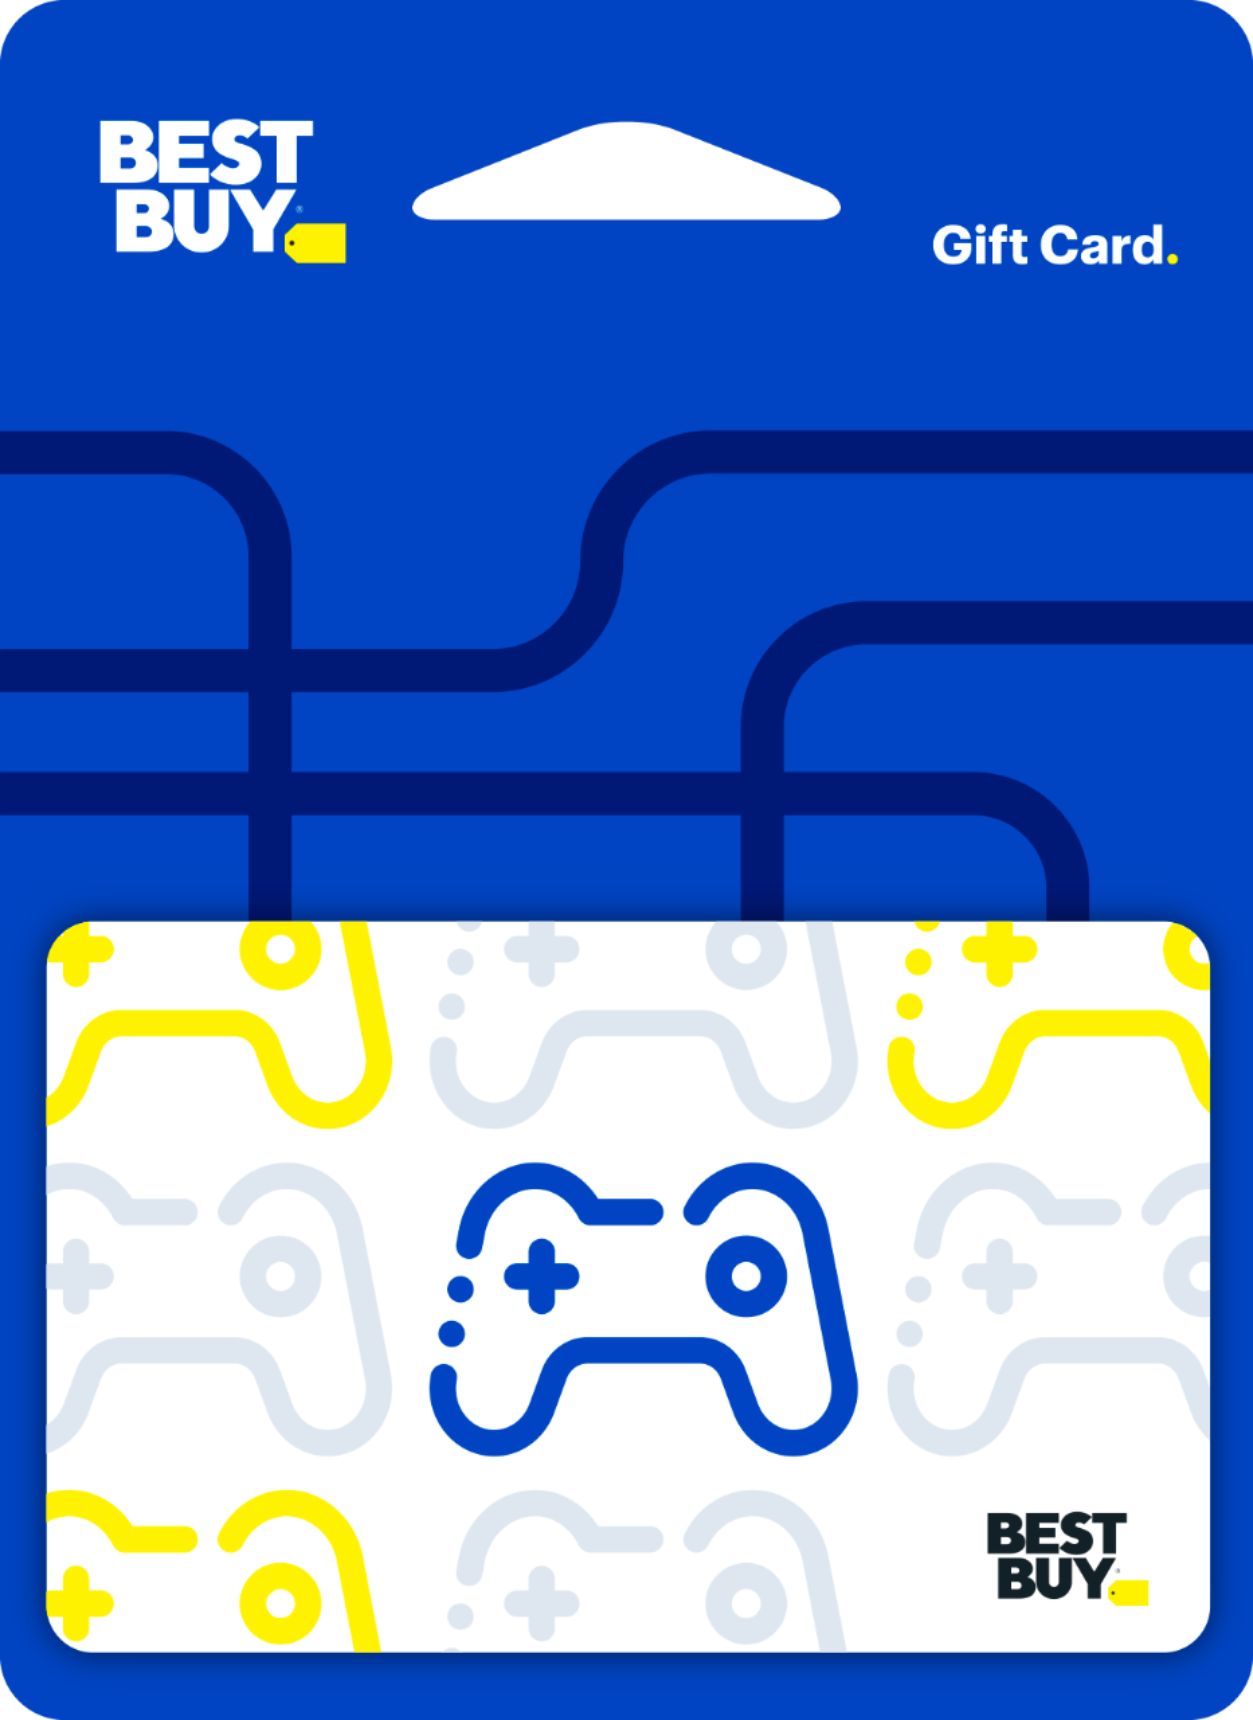 Roblox $25 Congratulations Digital Gift Card [Includes Exclusive